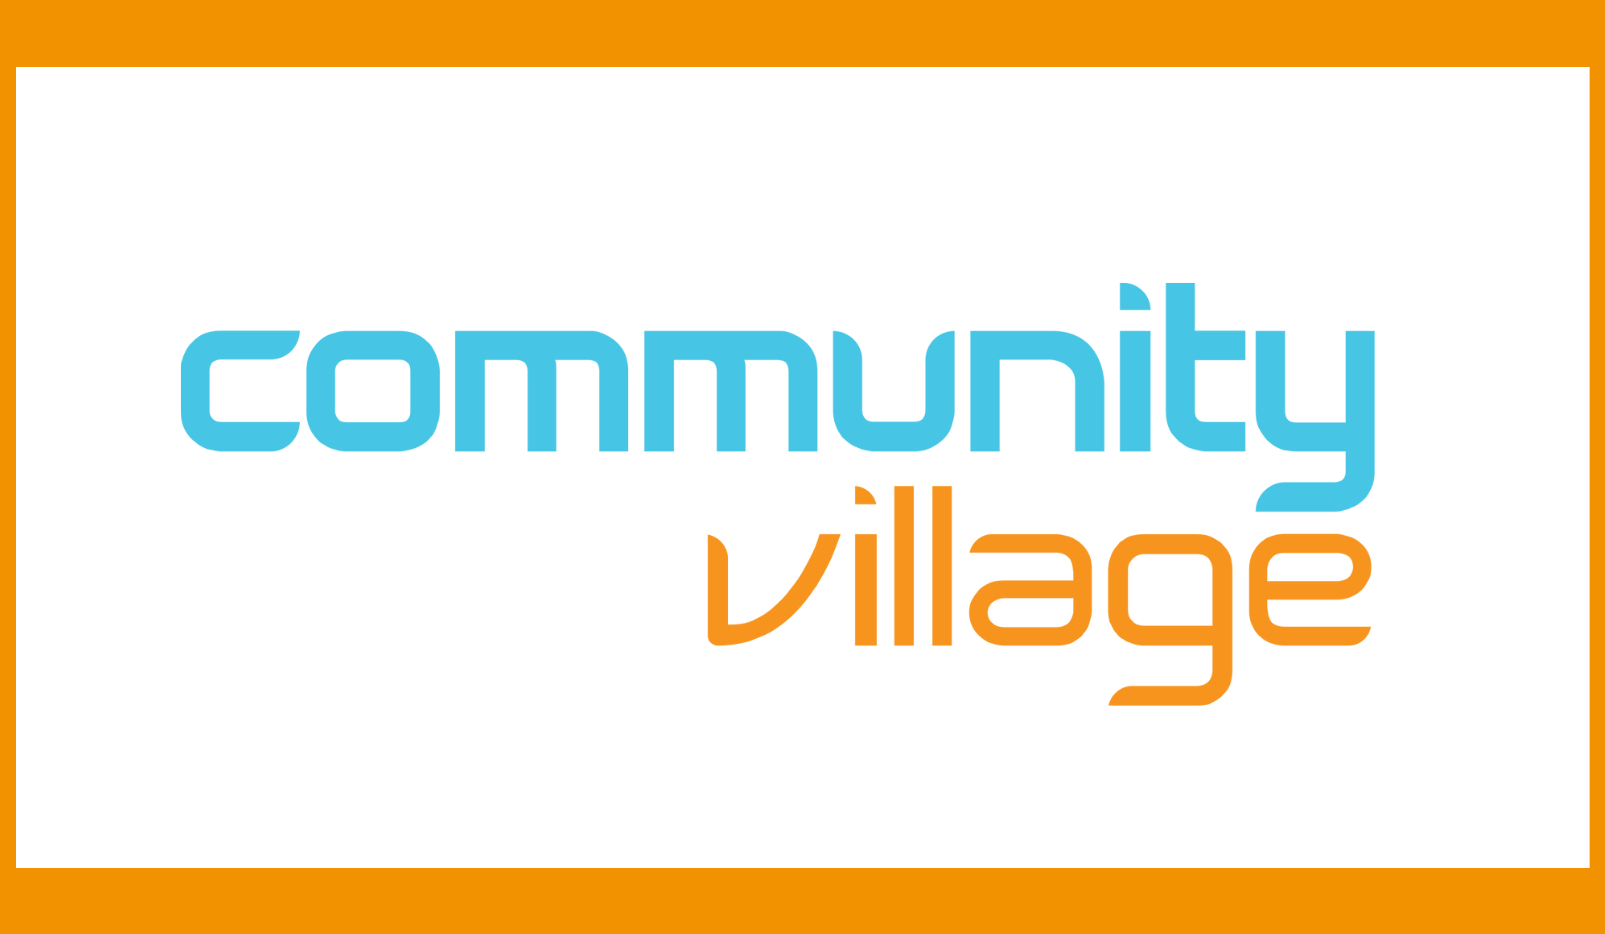 community villagee